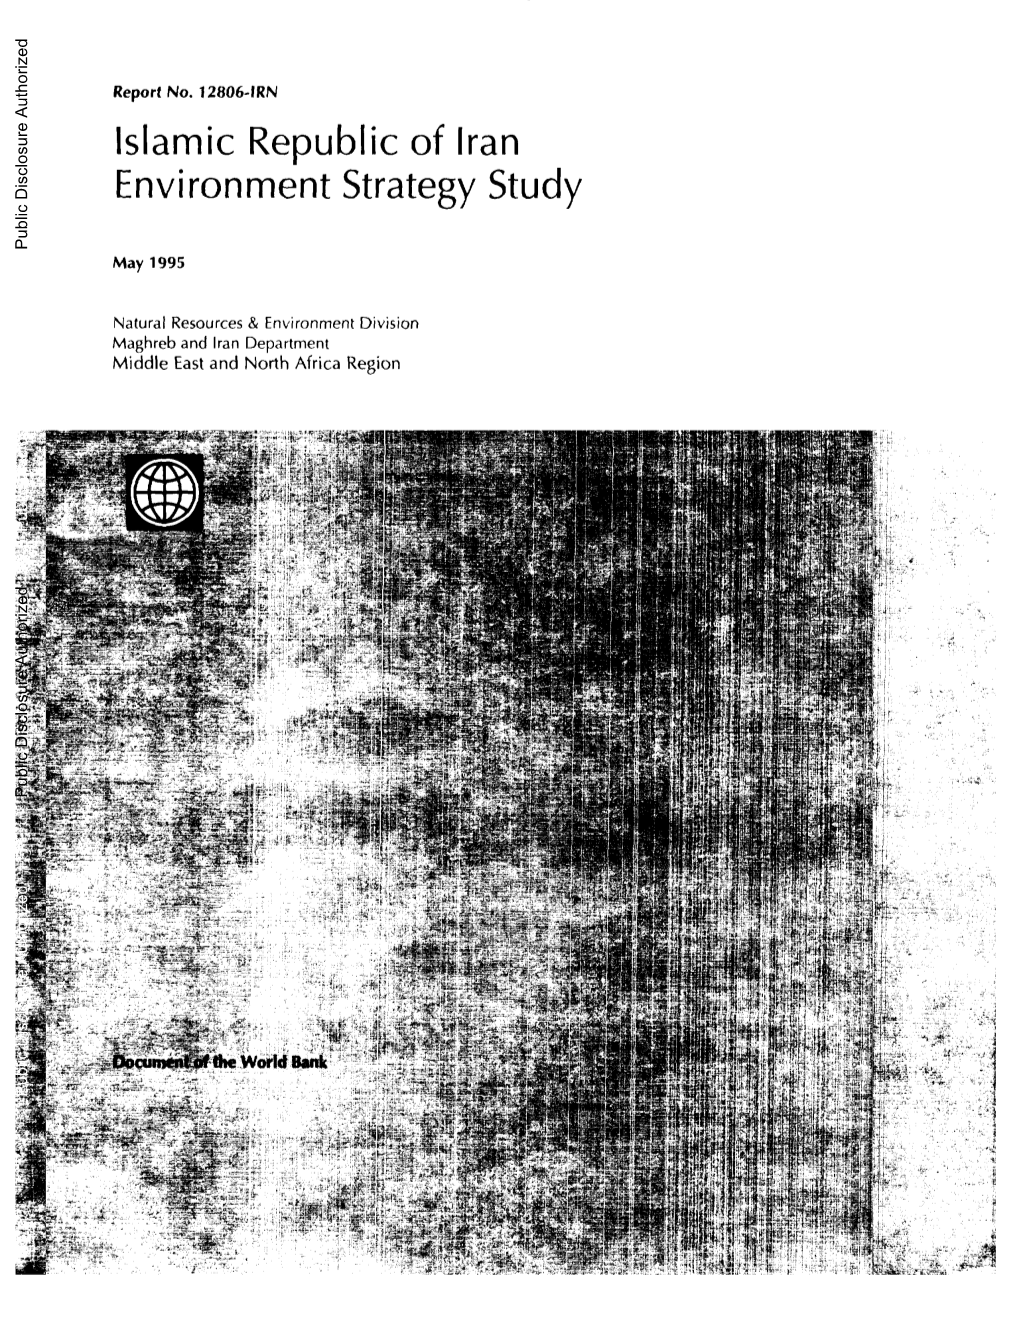 Islamic Republic of Iran Environment Strategy Study